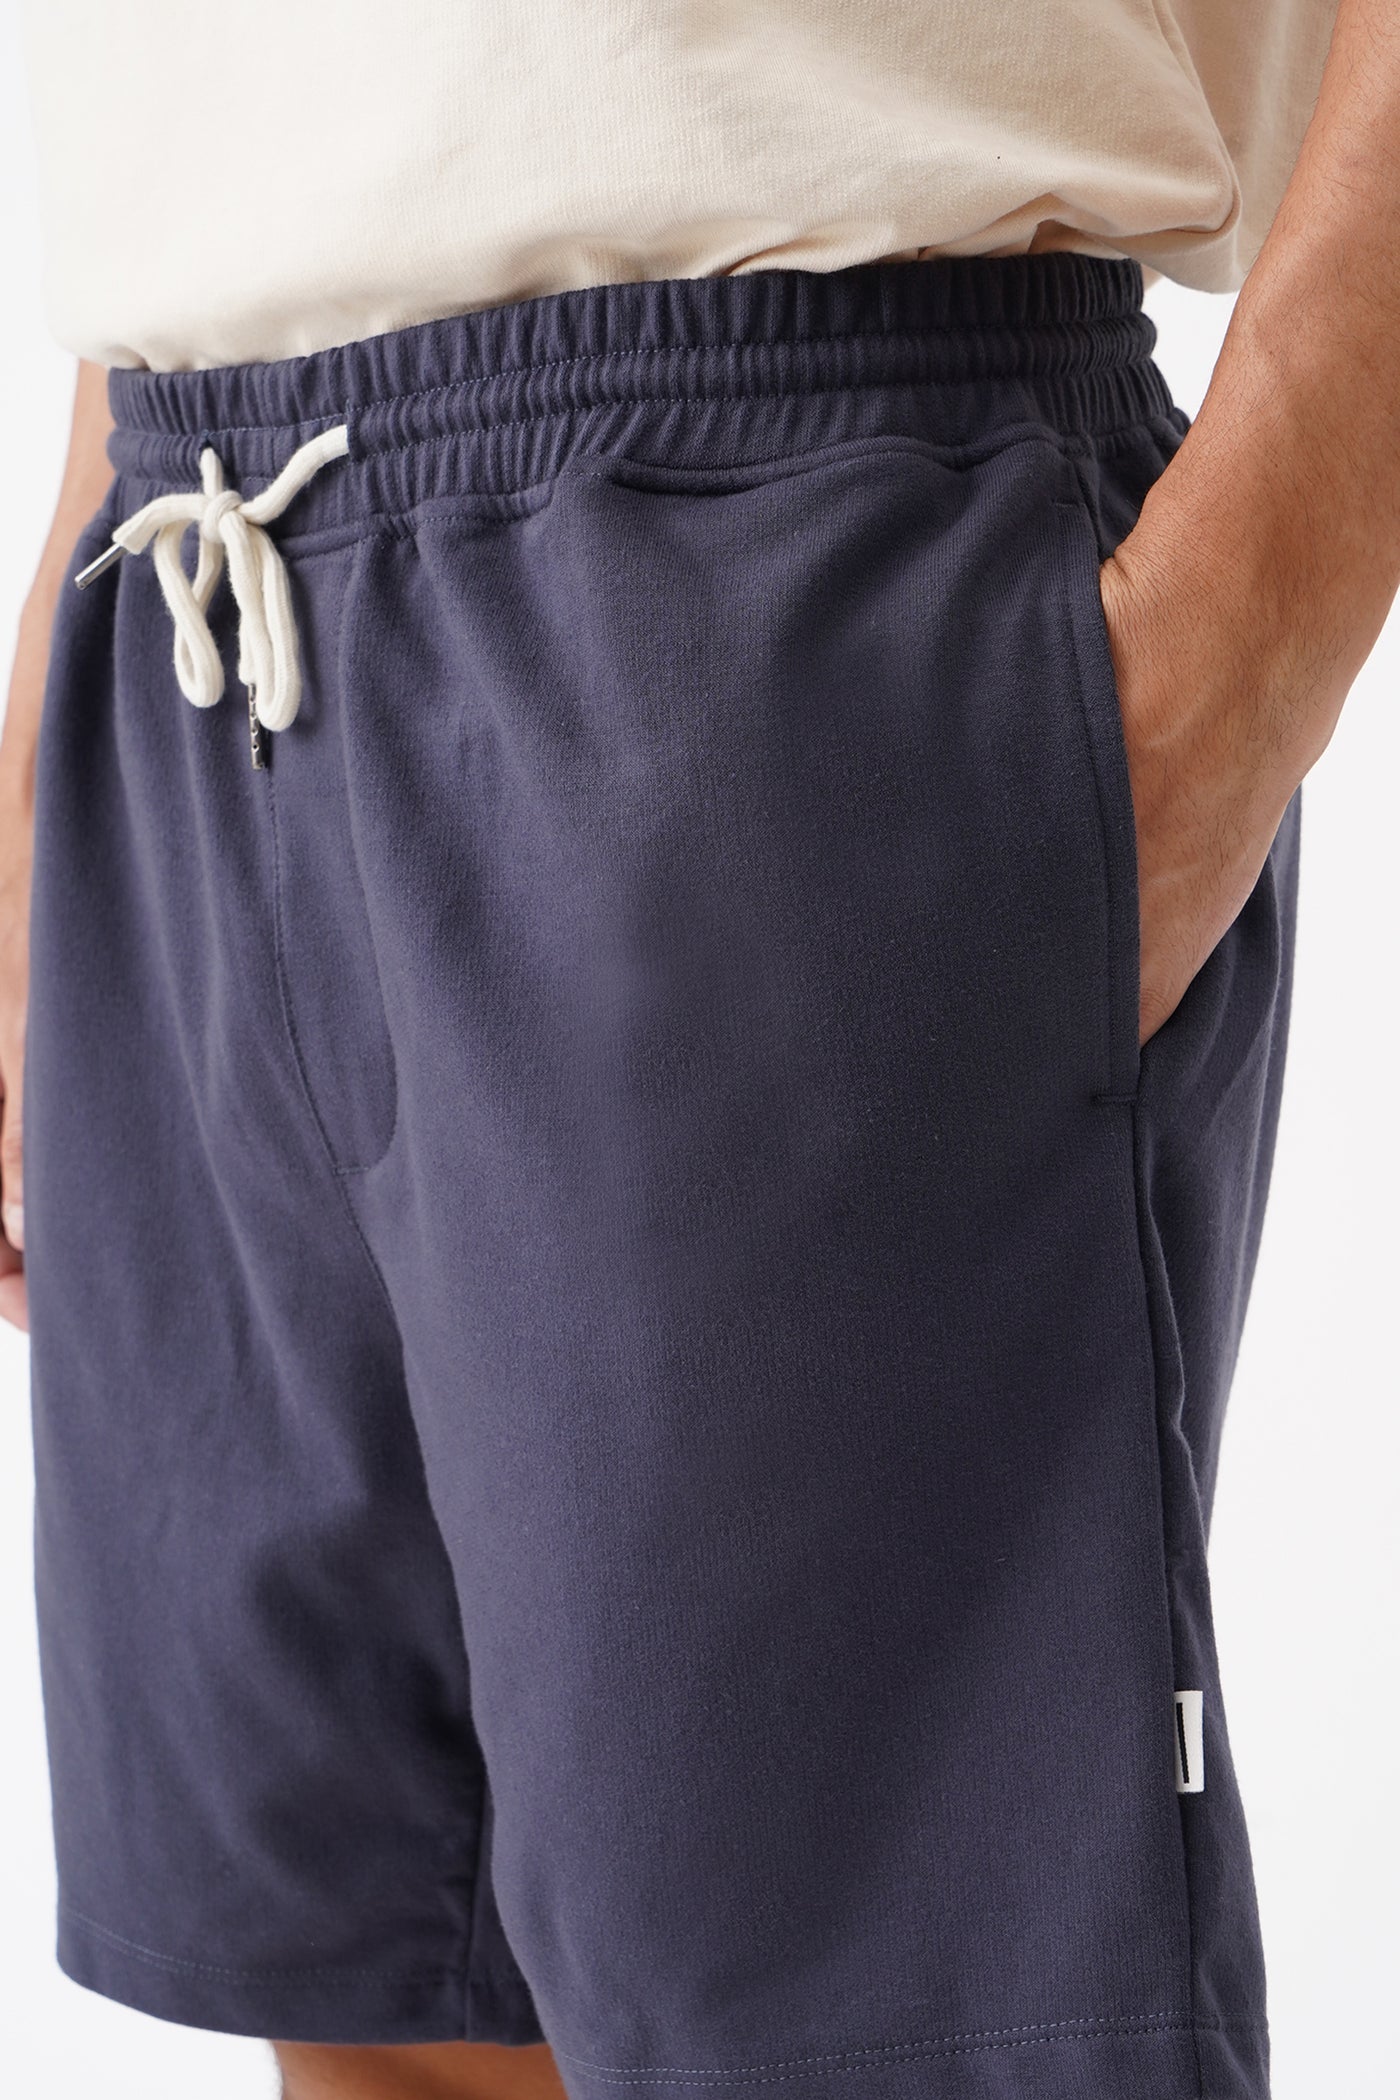 Unisex Everywear Shorts